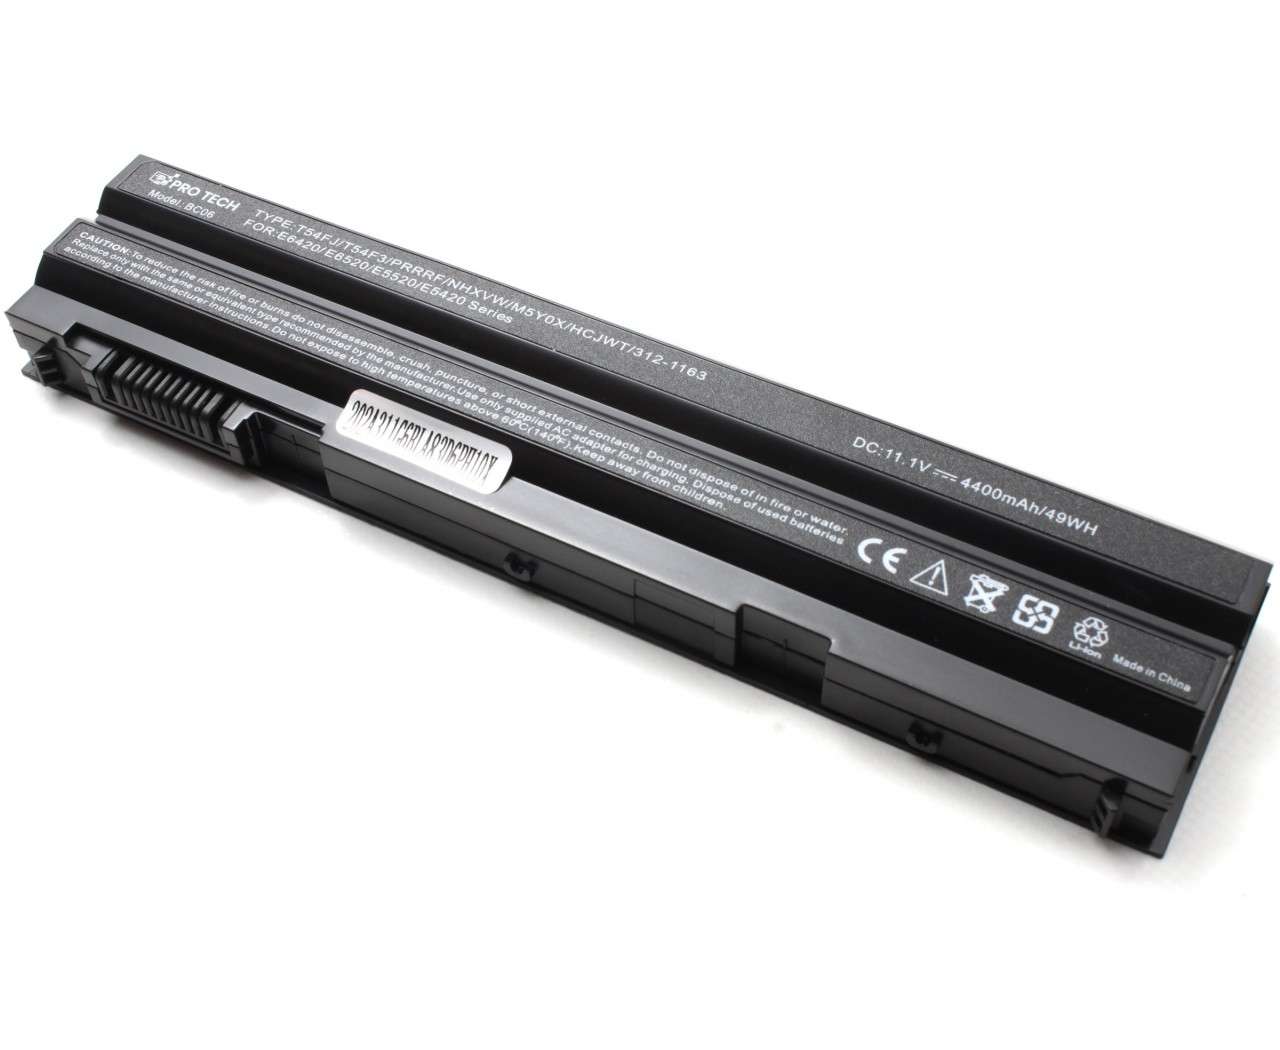 Baterie Dell Latitude E5430 imagine powerlaptop.ro 2021